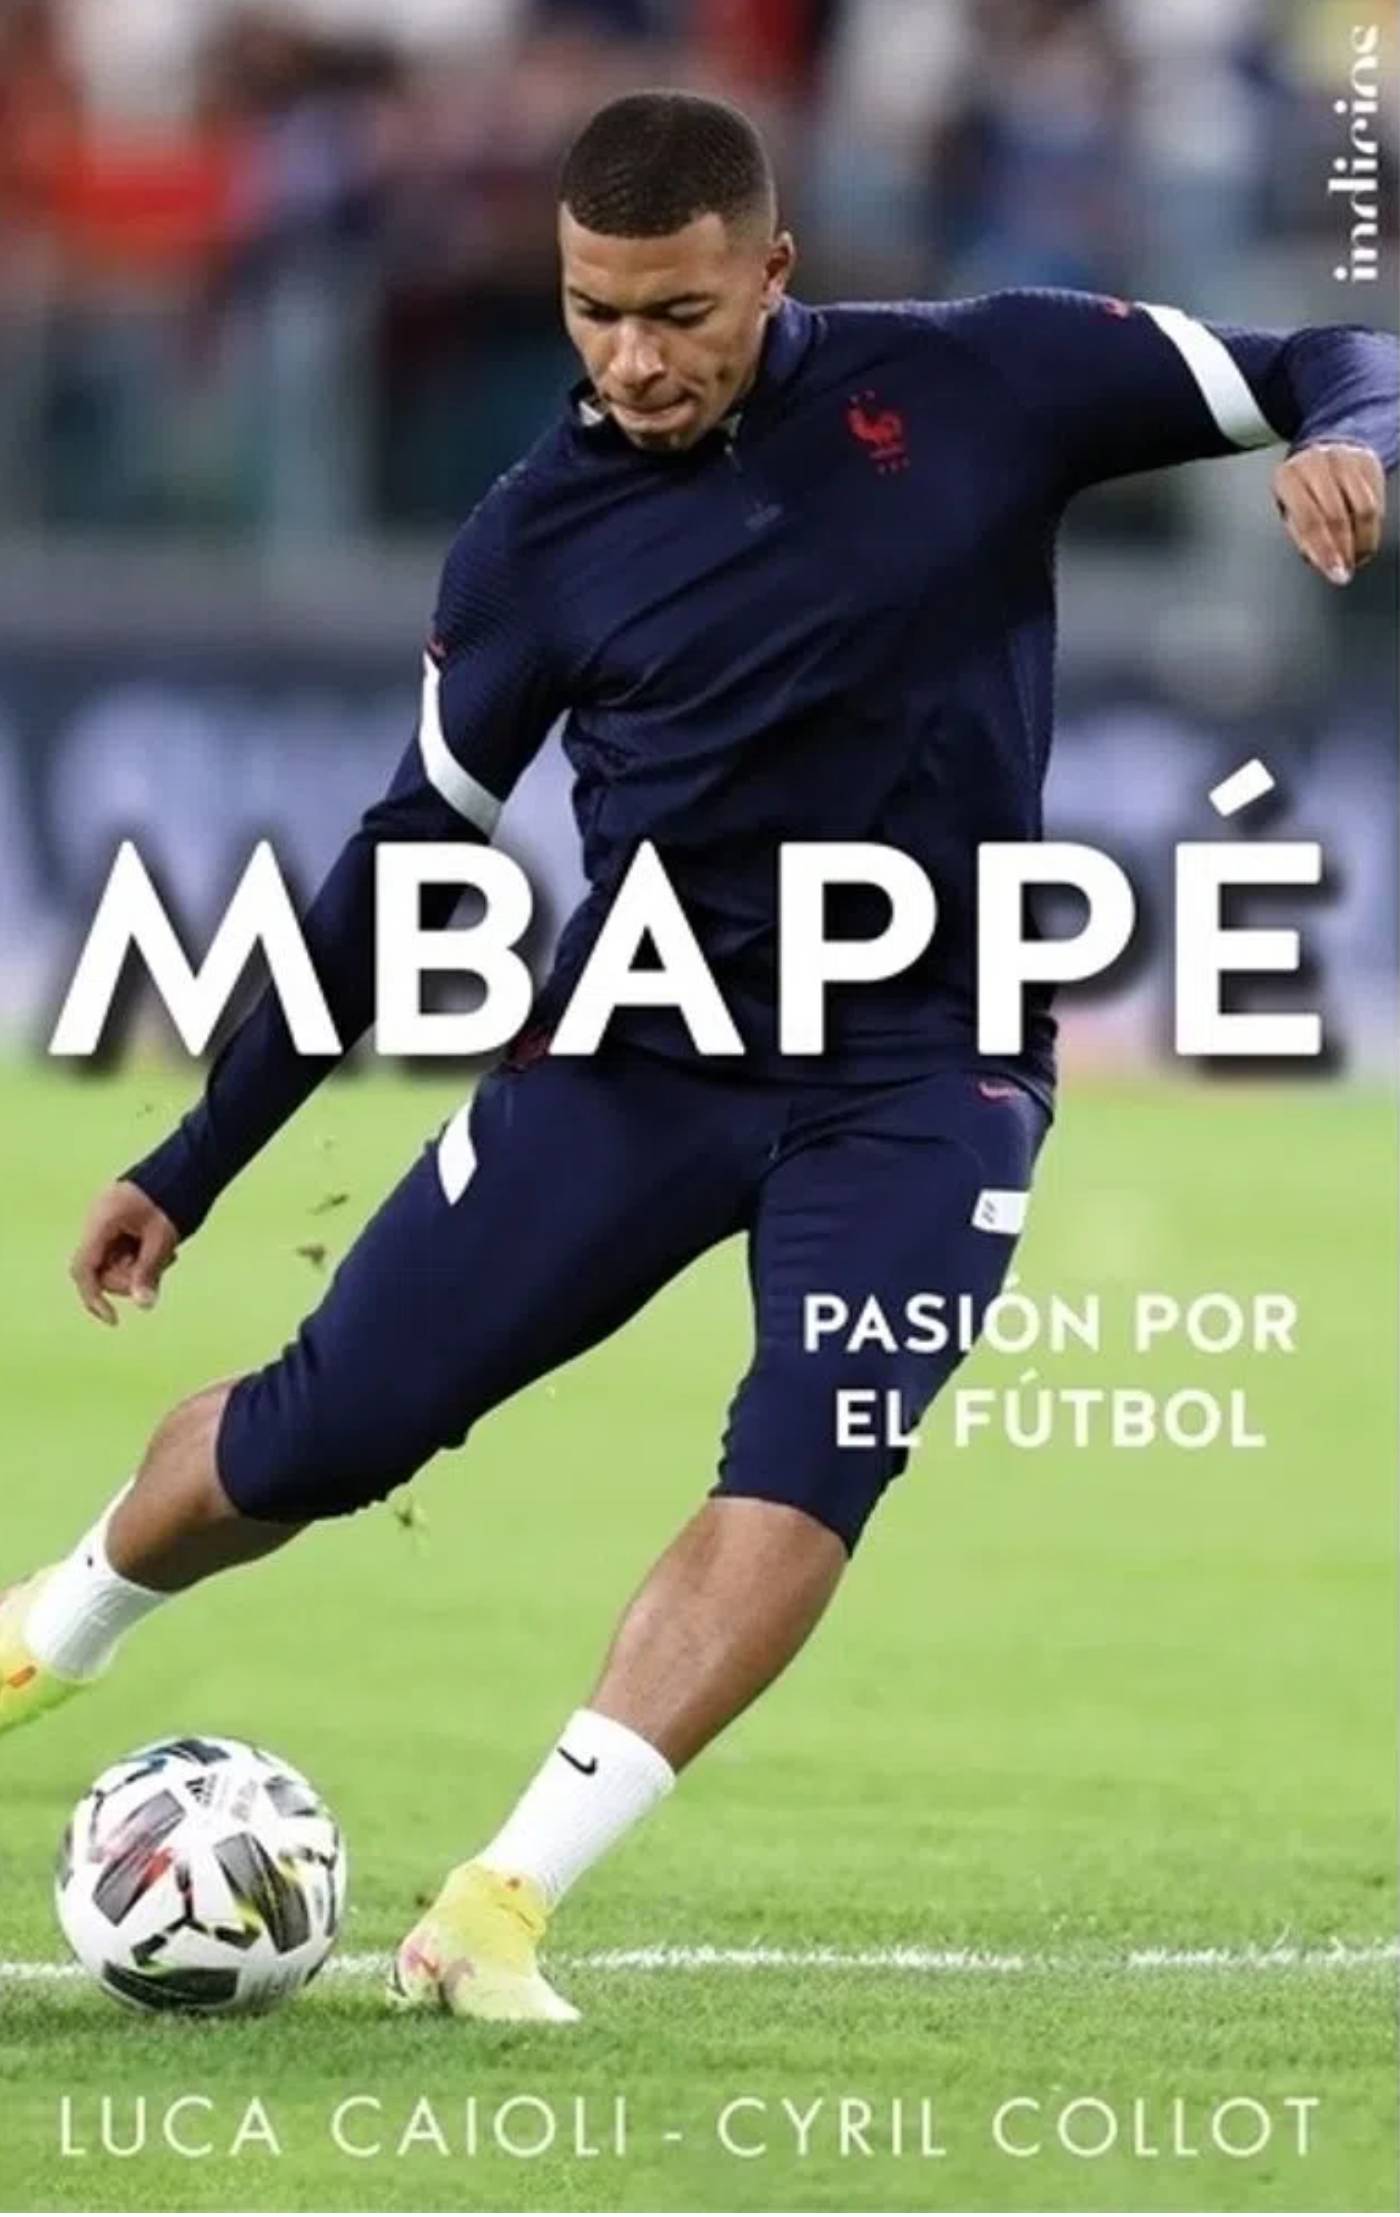 Mbappé pasion por el futbol